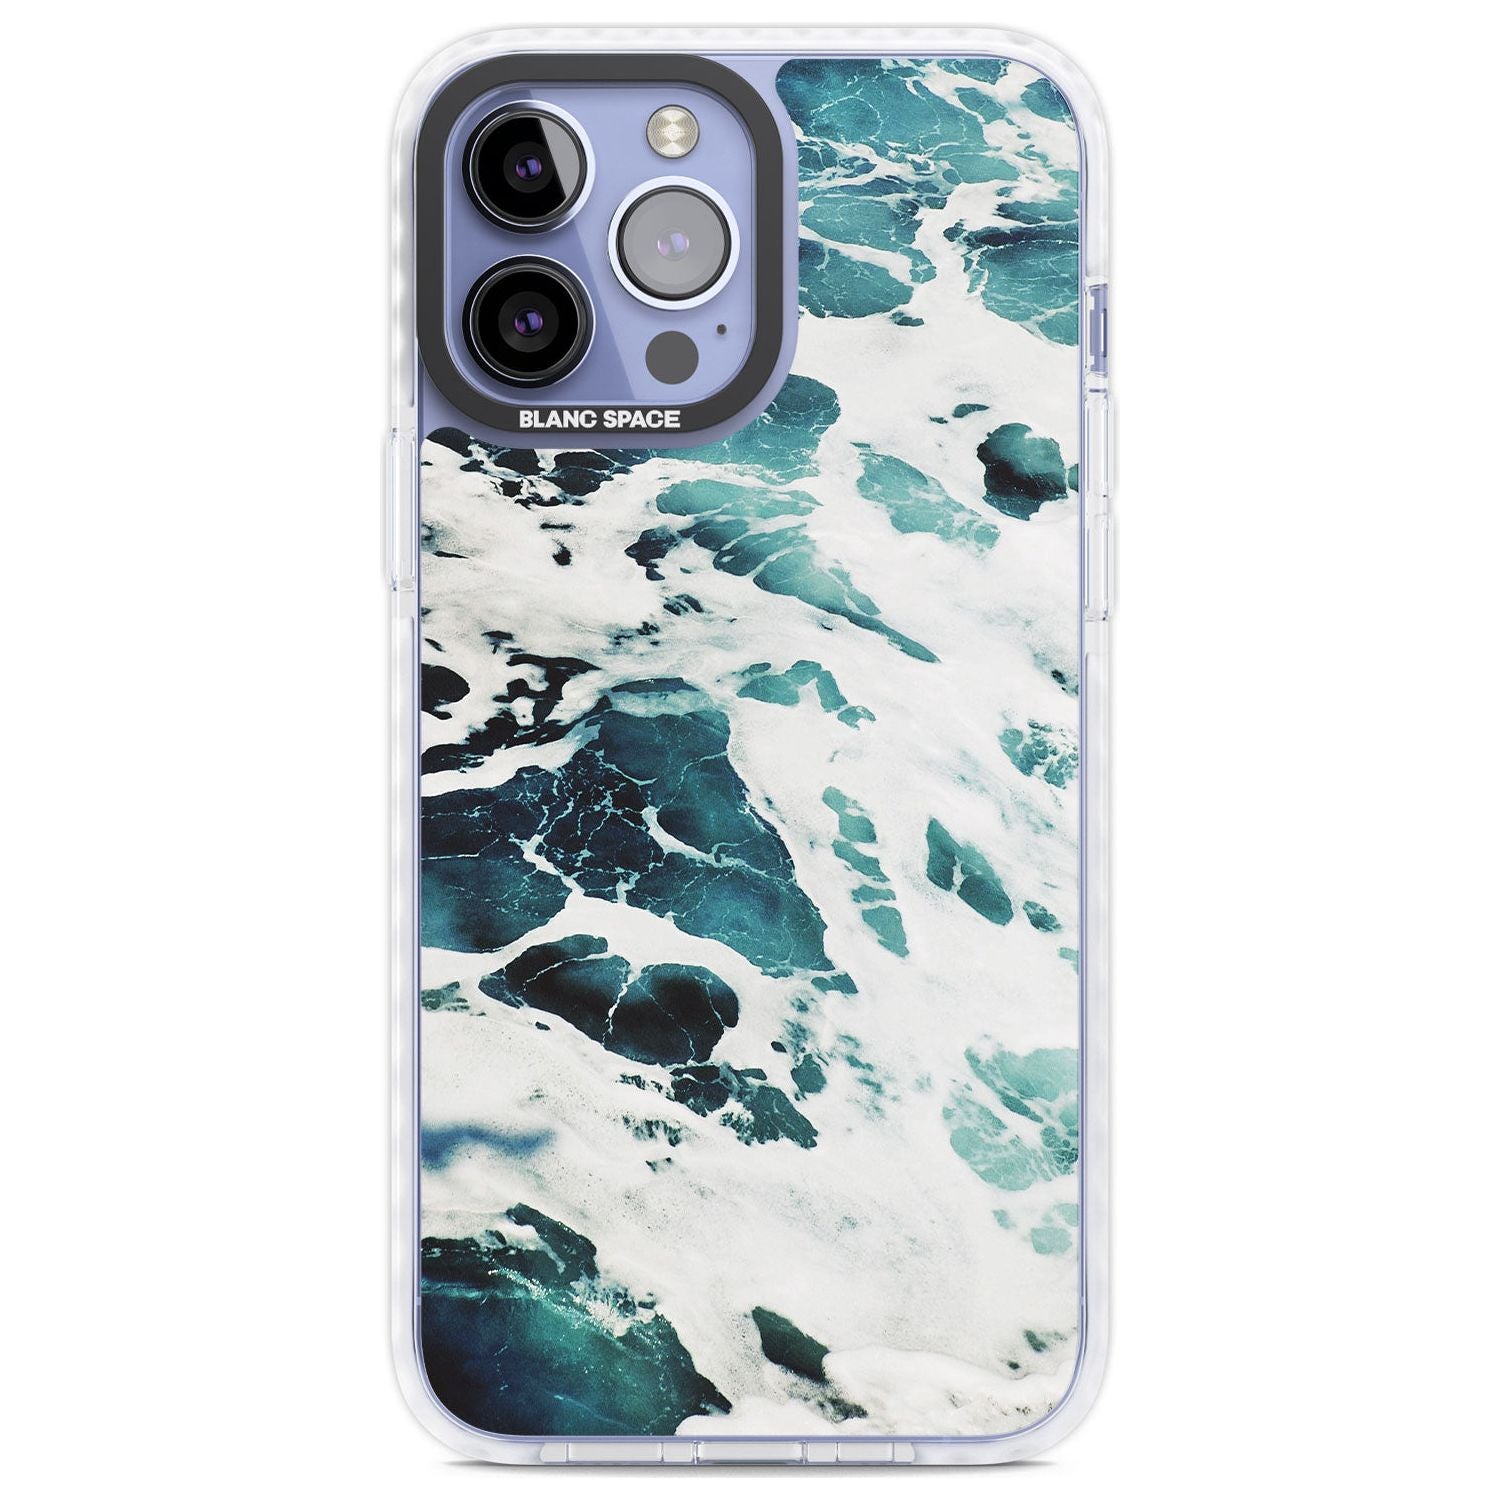 Ocean Waves Photograph Phone Case iPhone 13 Pro Max / Impact Case,iPhone 14 Pro Max / Impact Case Blanc Space